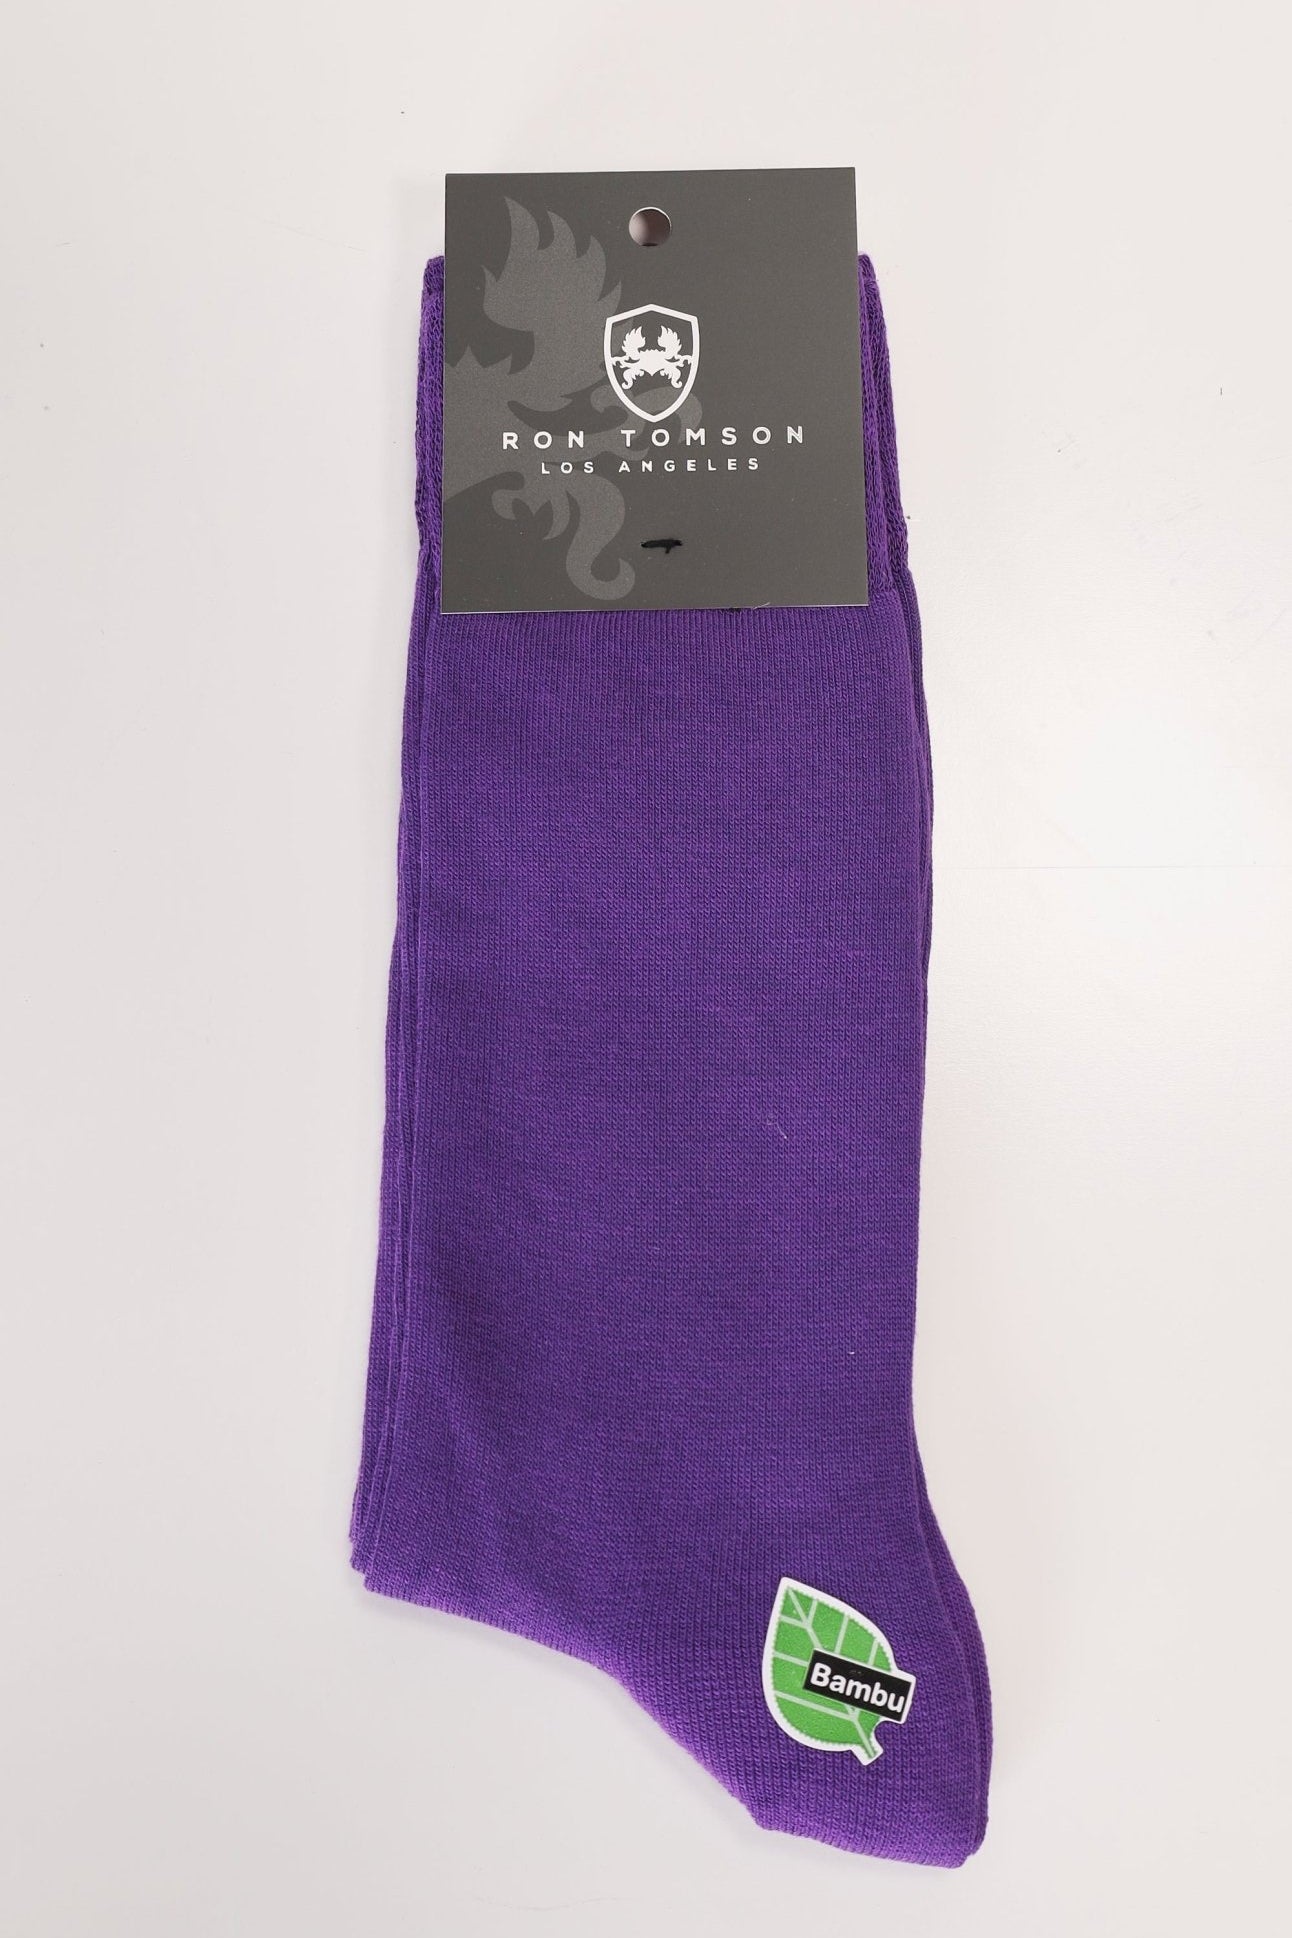 Solid Purple Sock - Ron Tomson